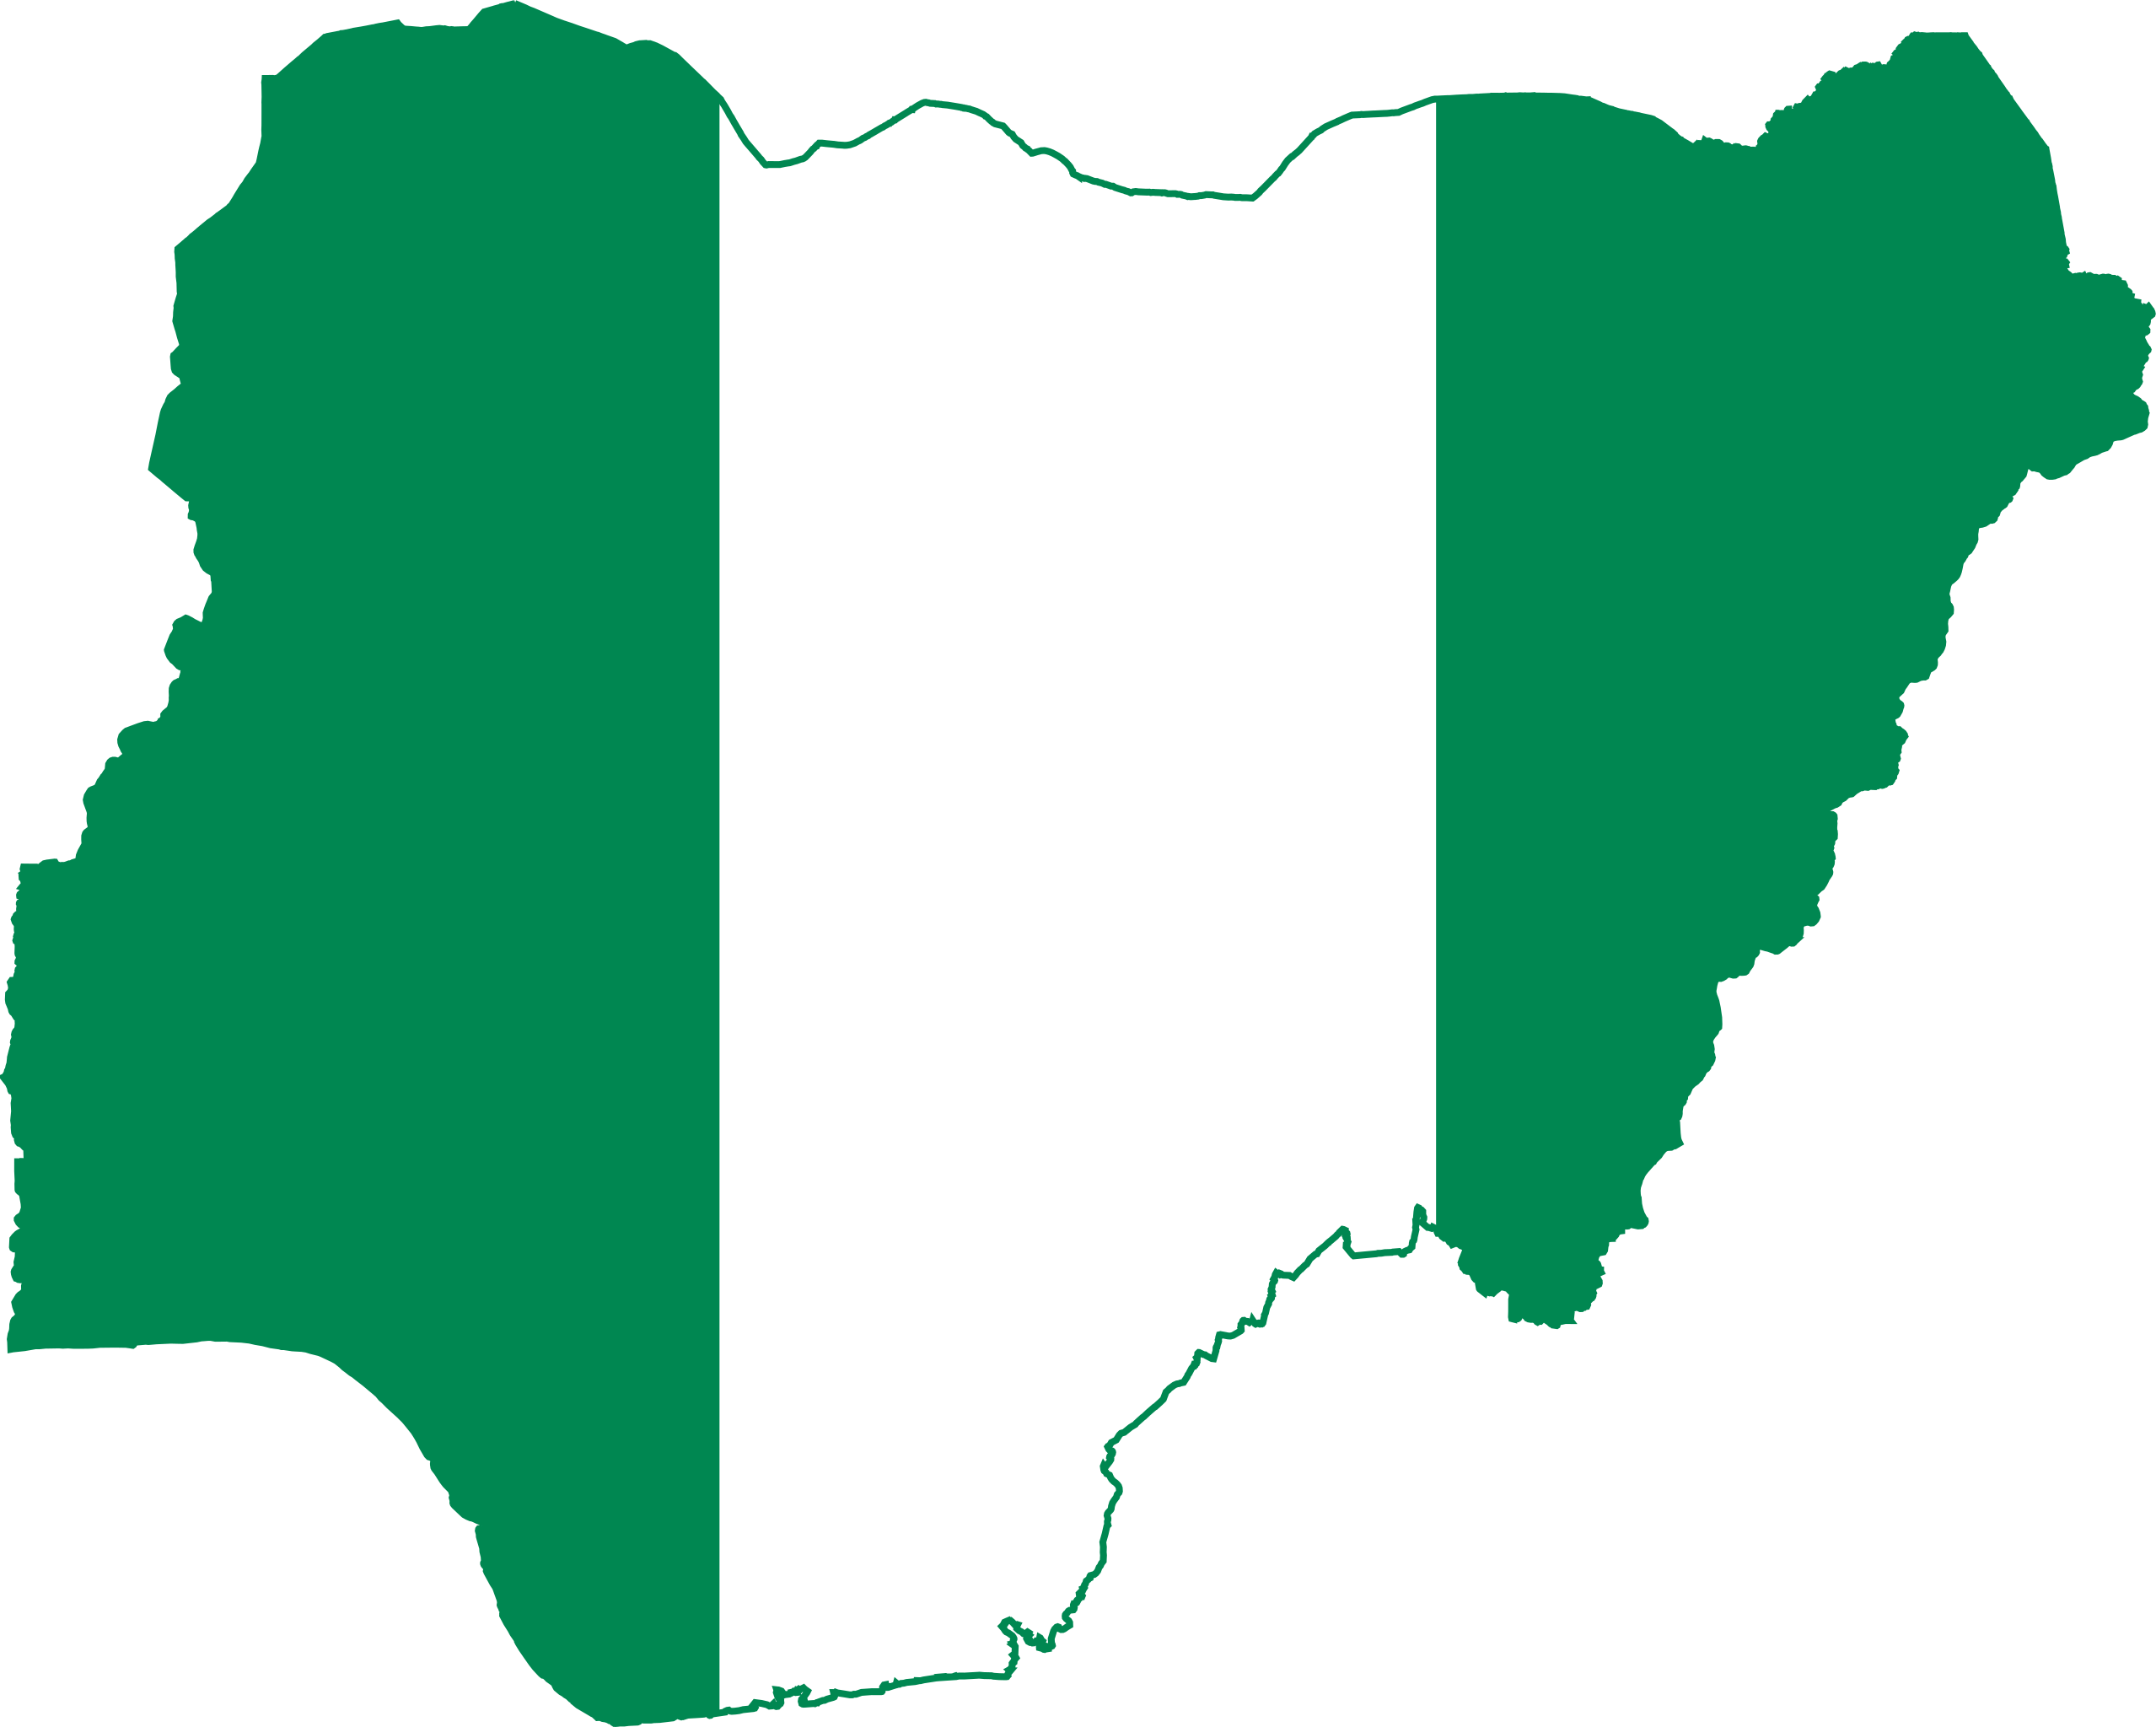 The Nigerian Flag 